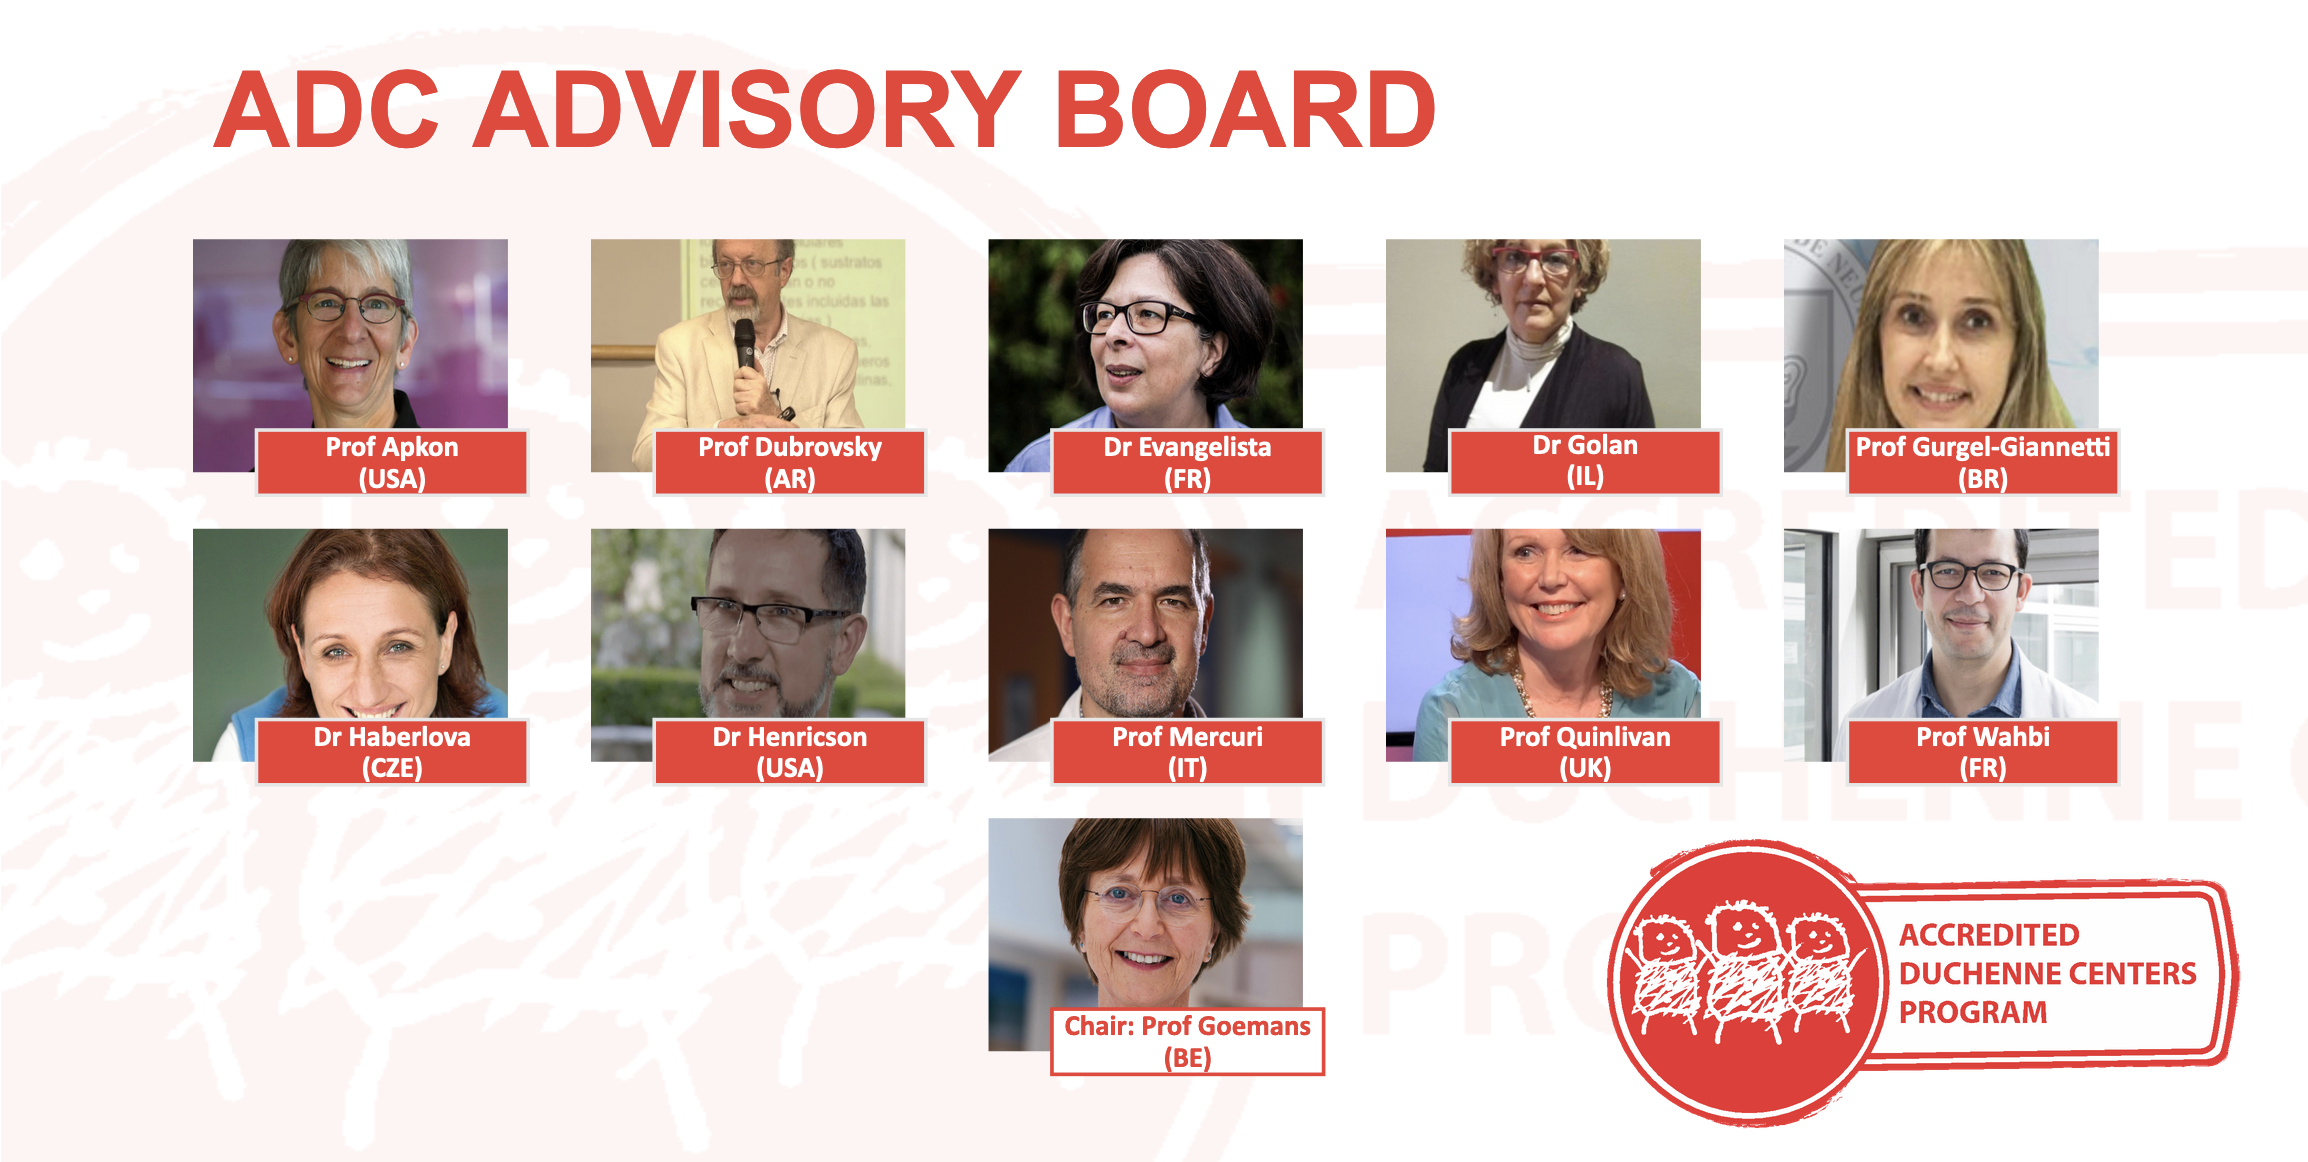 Accredited Duchenne Center Program Advisory Board